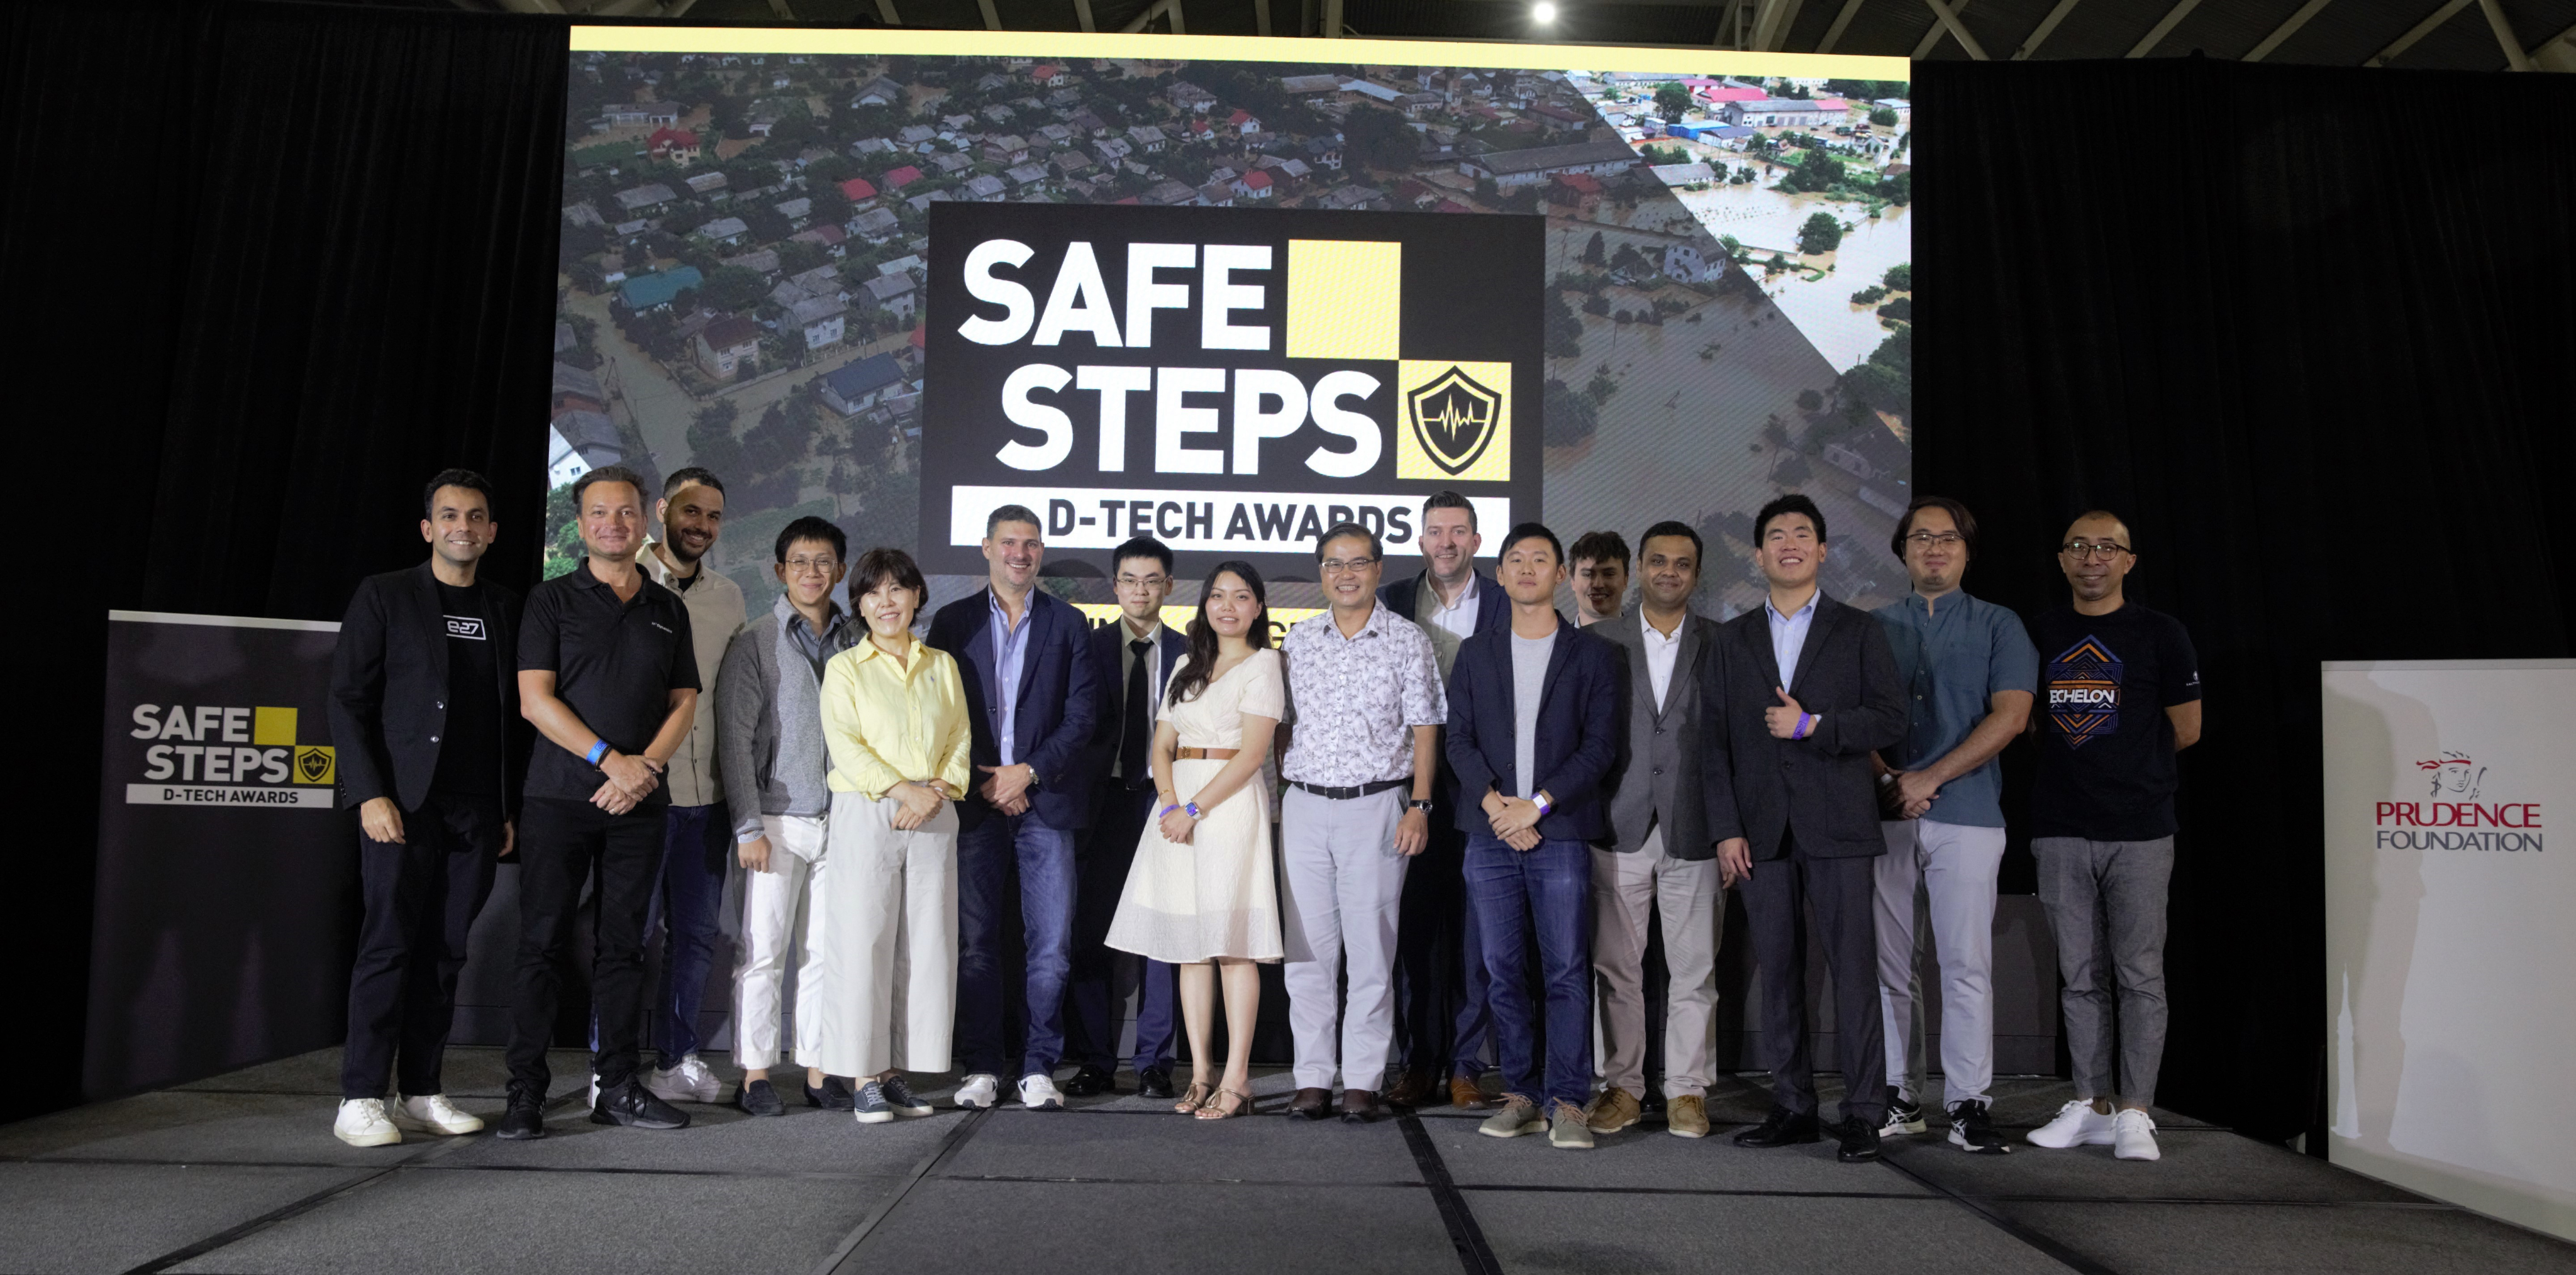 SAFE STEPS D-Tech Awards image 1